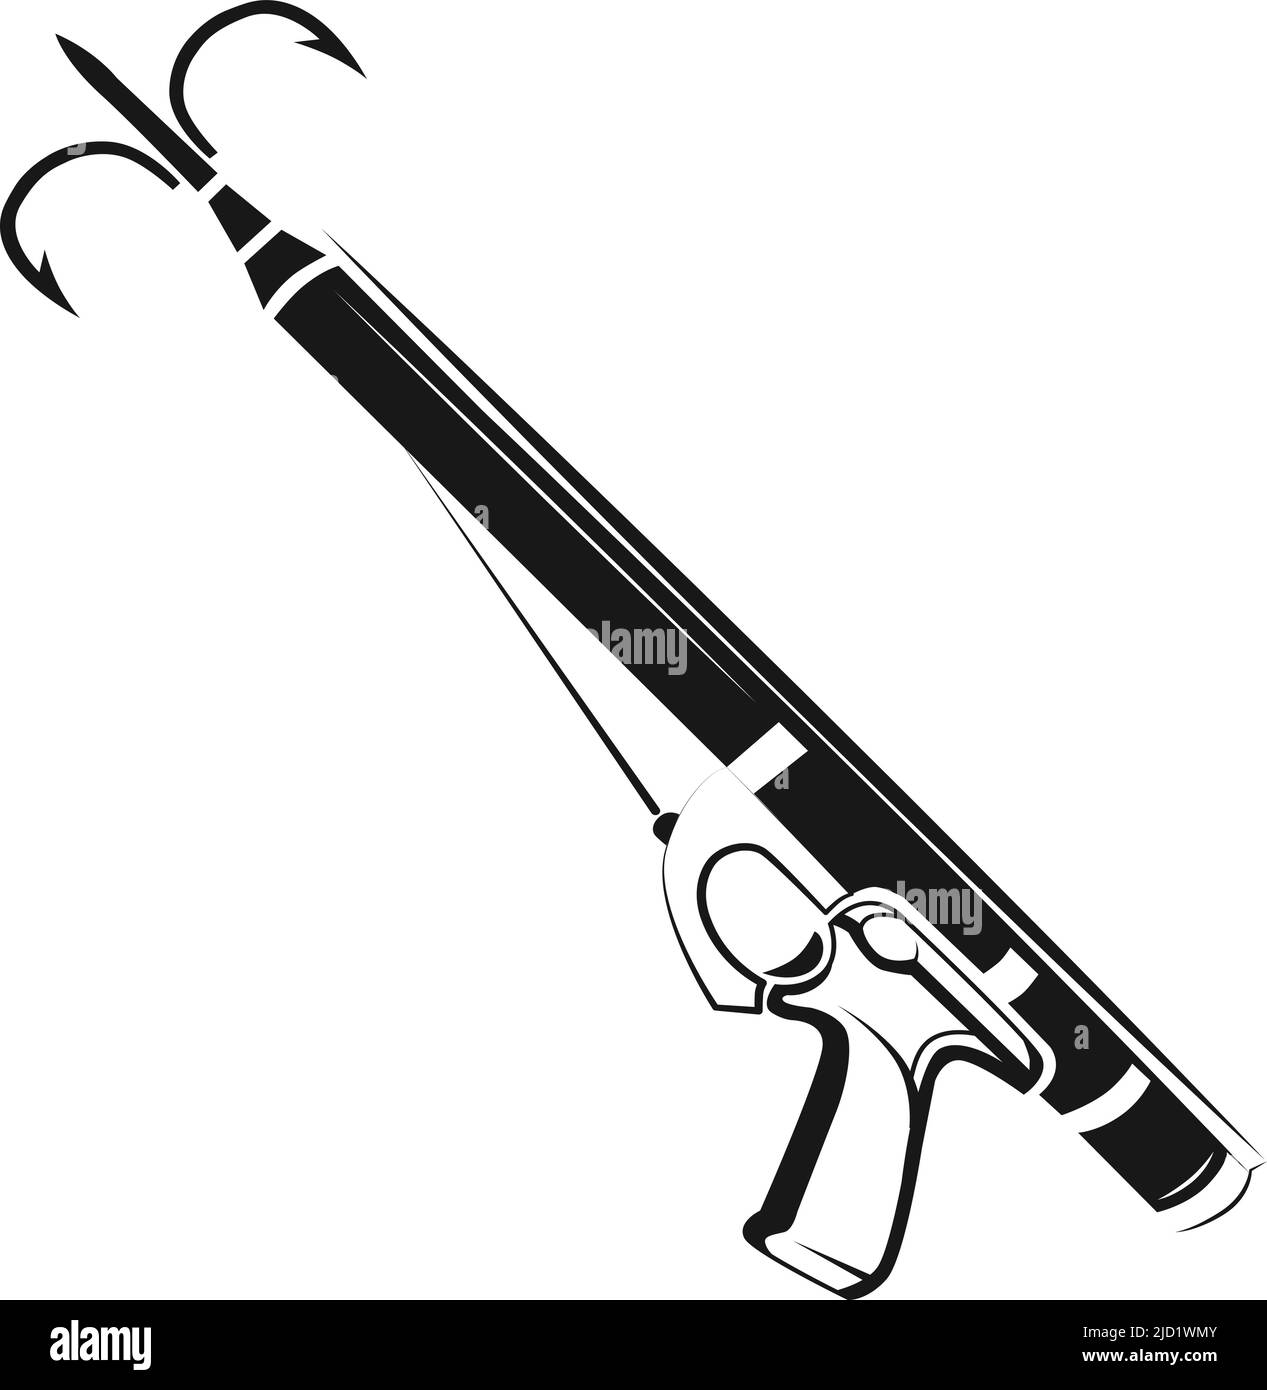 Harpoon gun icon. Black hunting weapon symbol Stock Vector Image